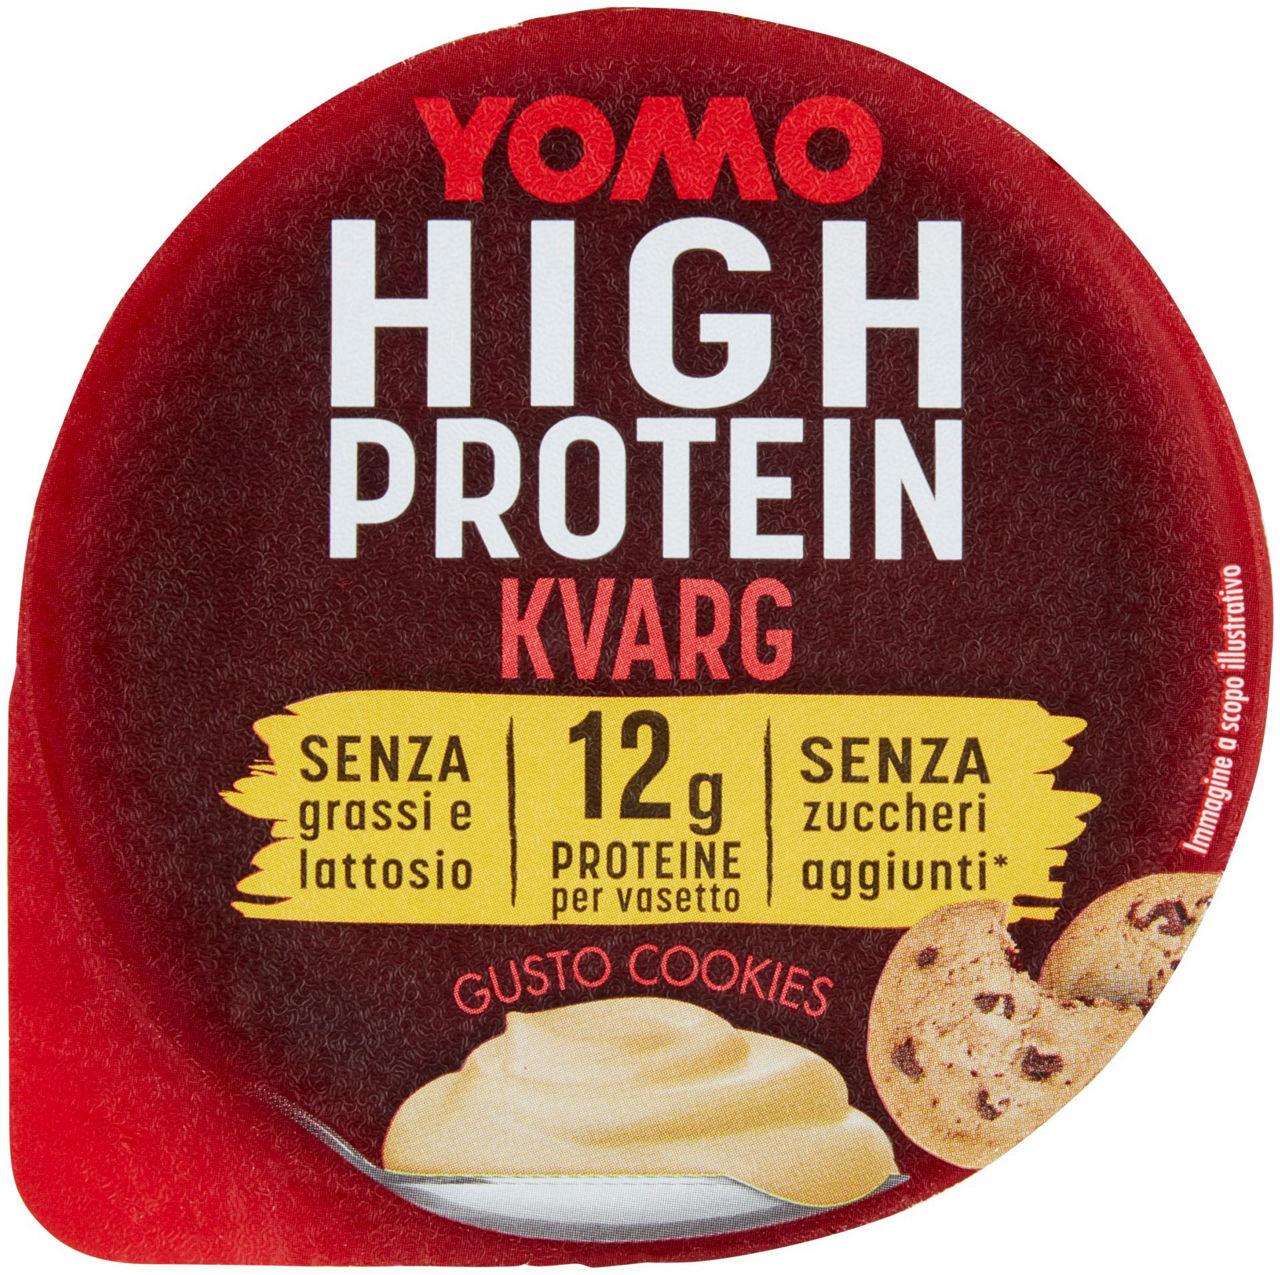 Yomo high protein kvarg cookies g 140